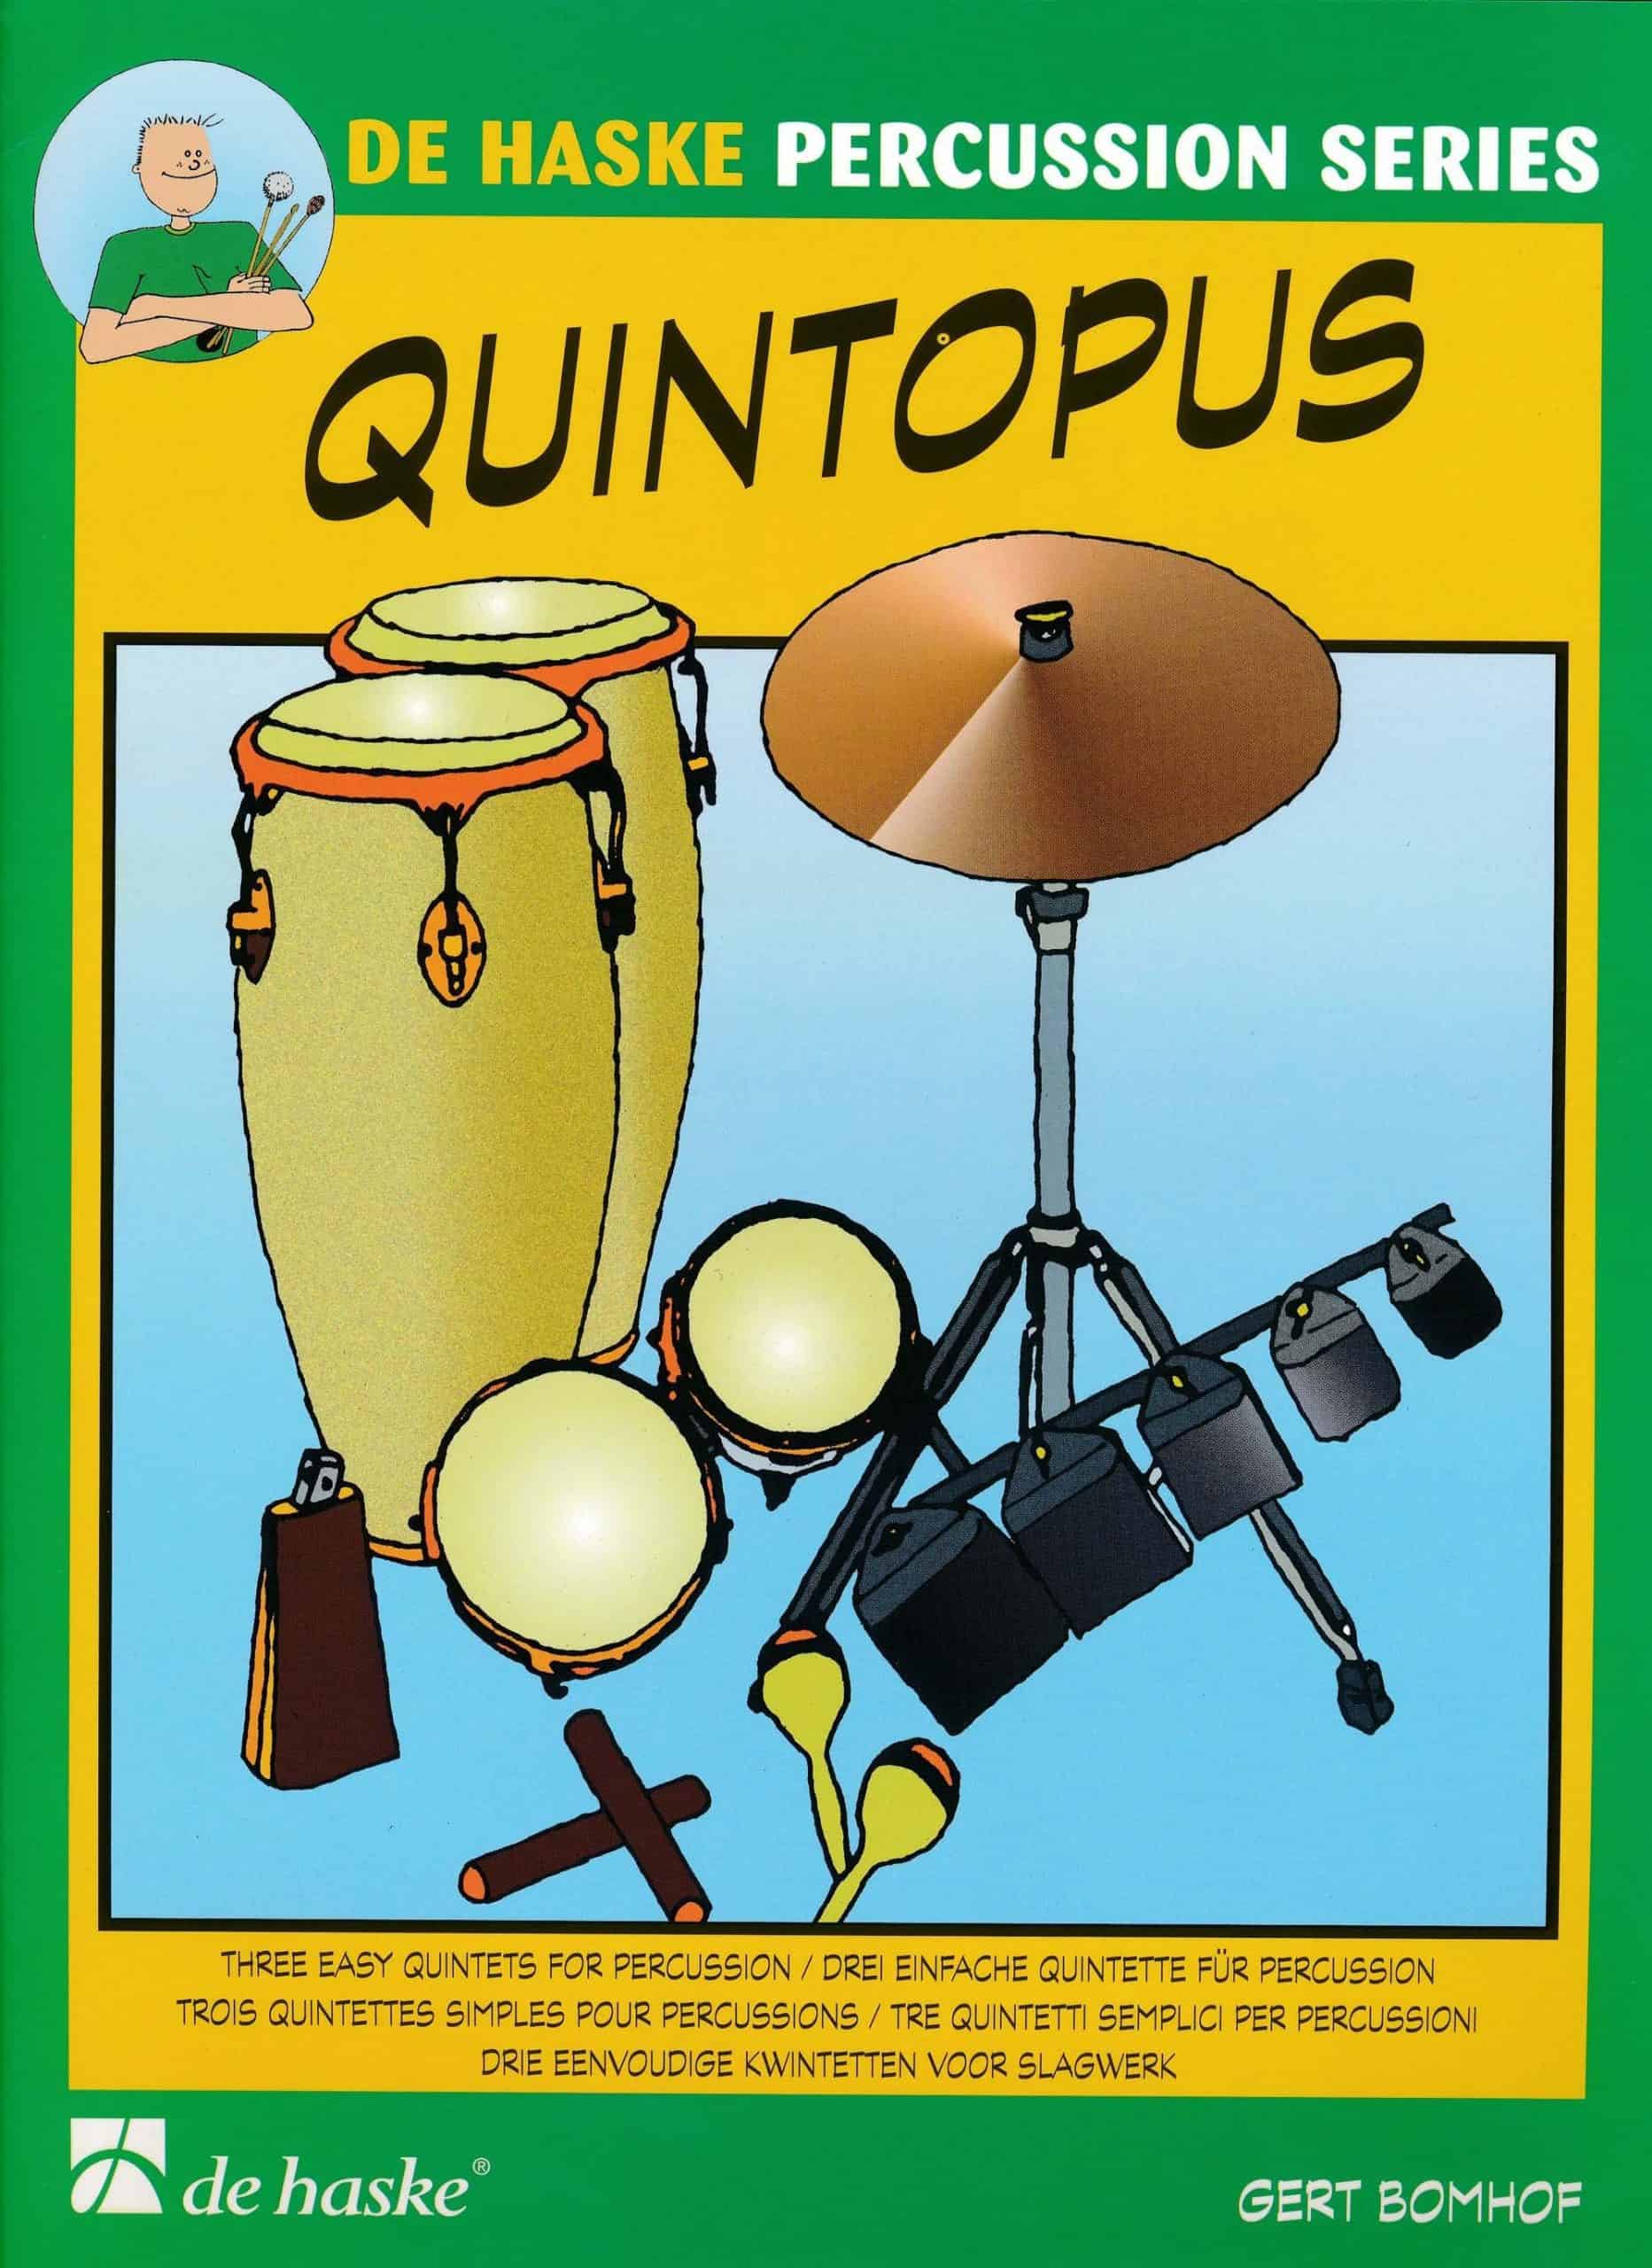 Quintopus